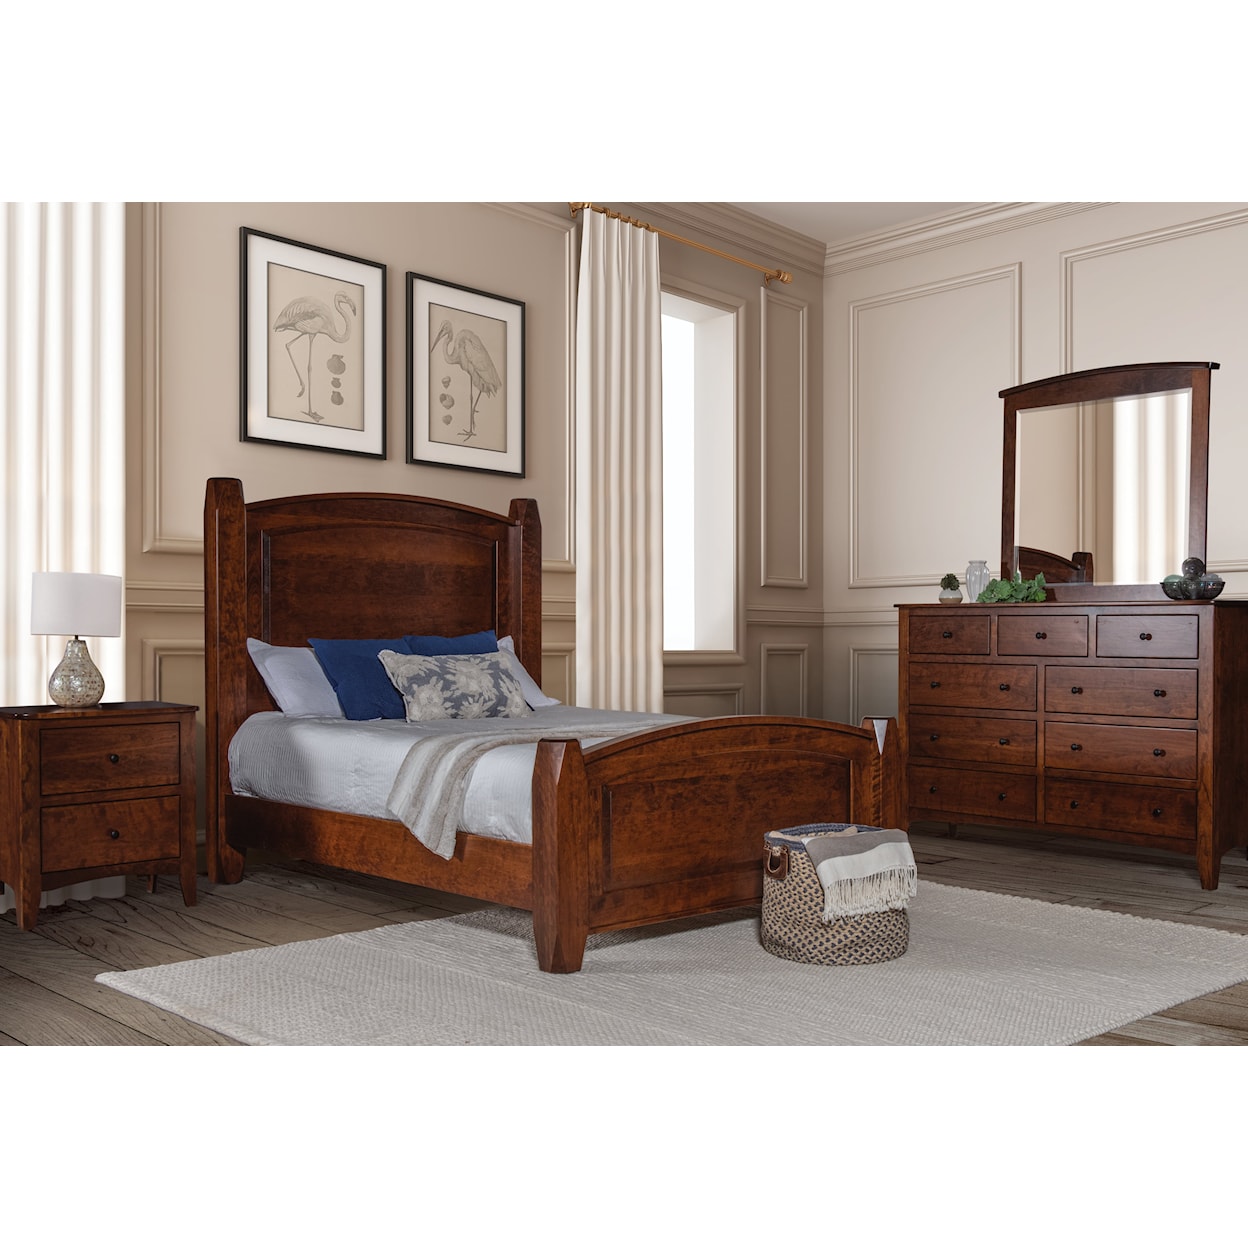 Archbold Furniture Bob Timberlake 4-Piece Queen Bedroom Set